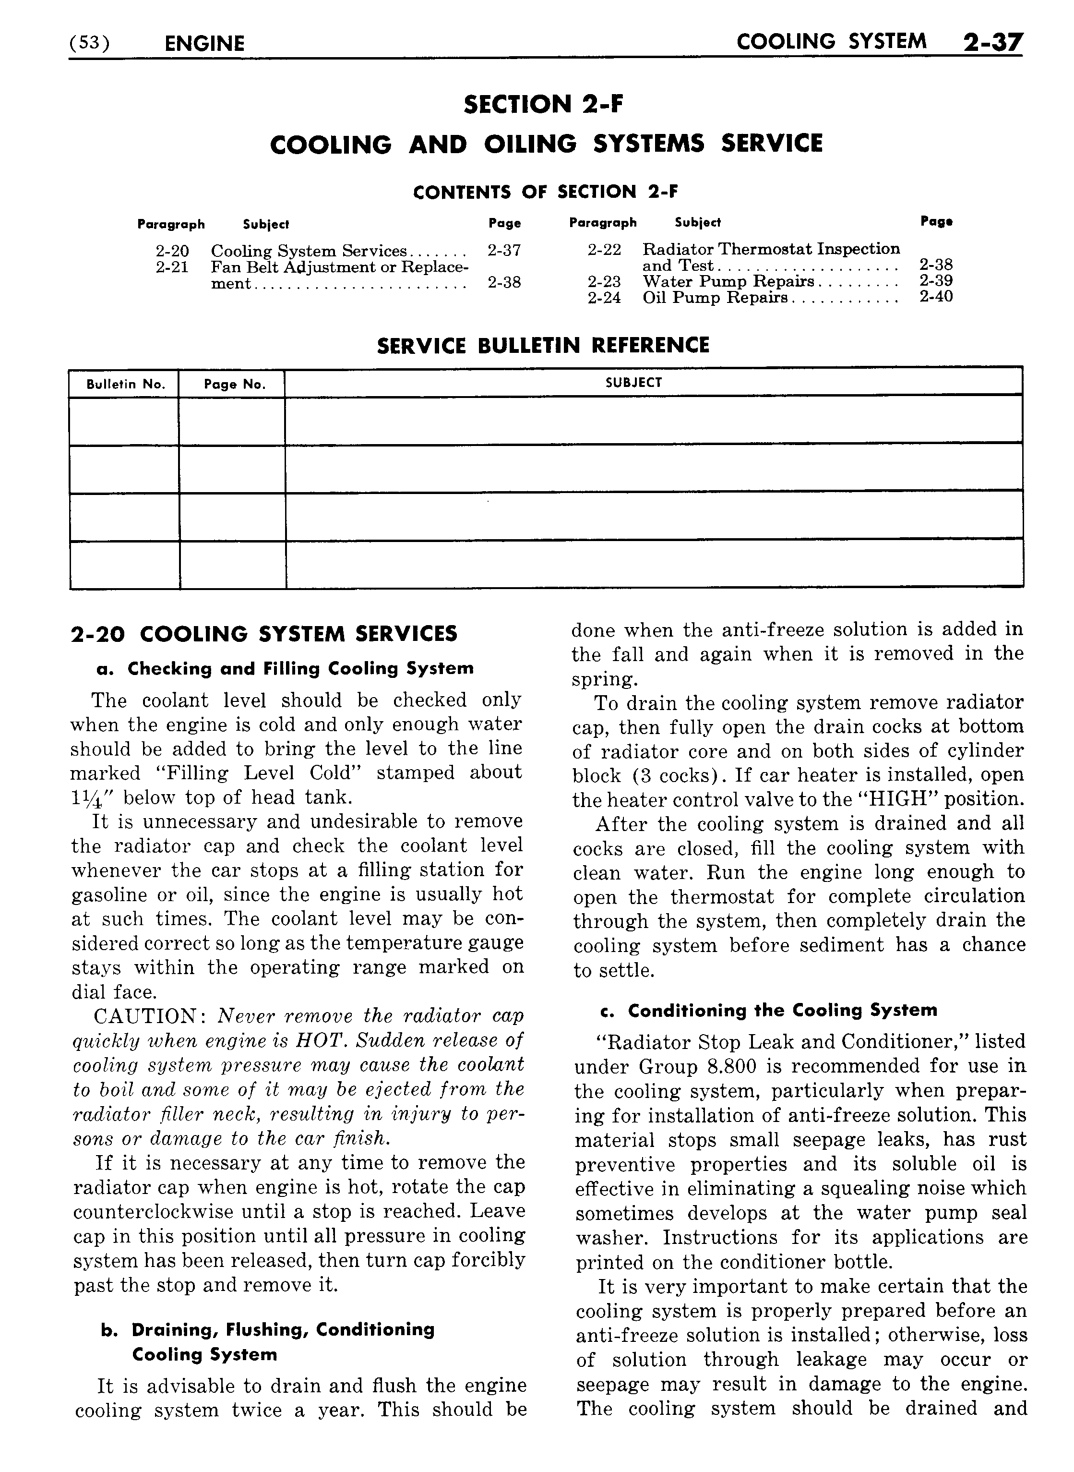 n_03 1954 Buick Shop Manual - Engine-037-037.jpg